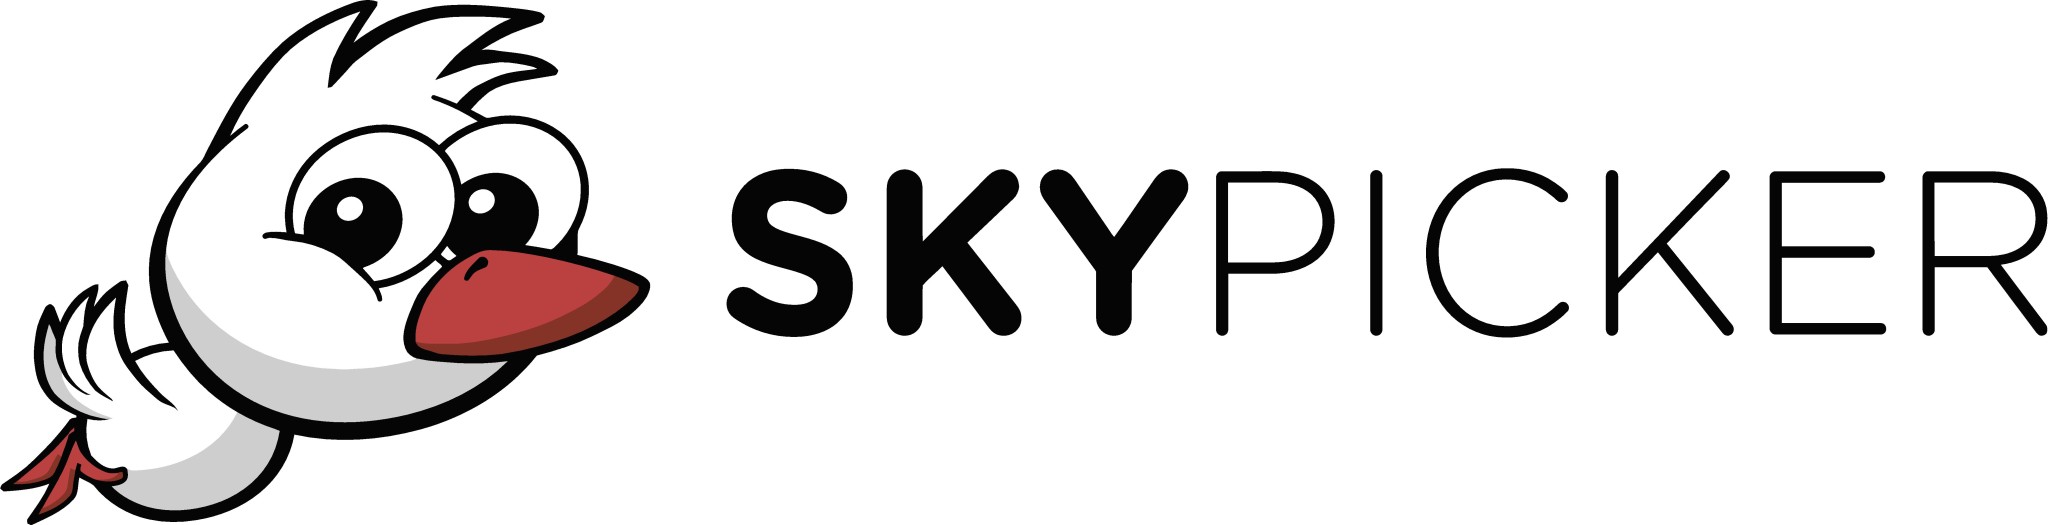 Skypicker Voucher Code